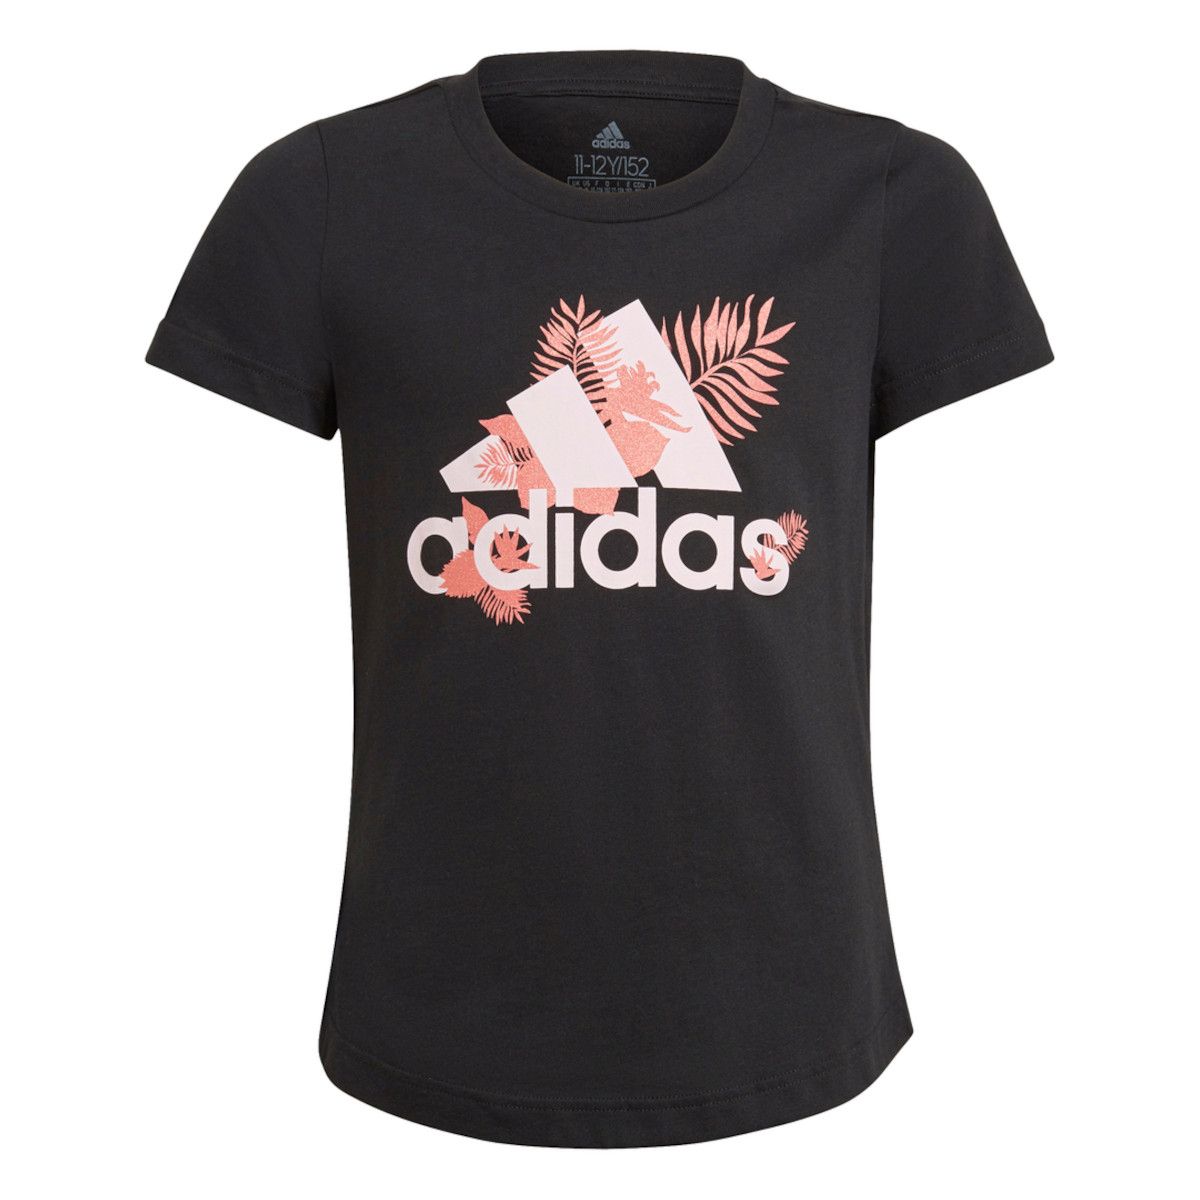 adidas Tropical Sports Graphic Girl's T-shirt GJ6515